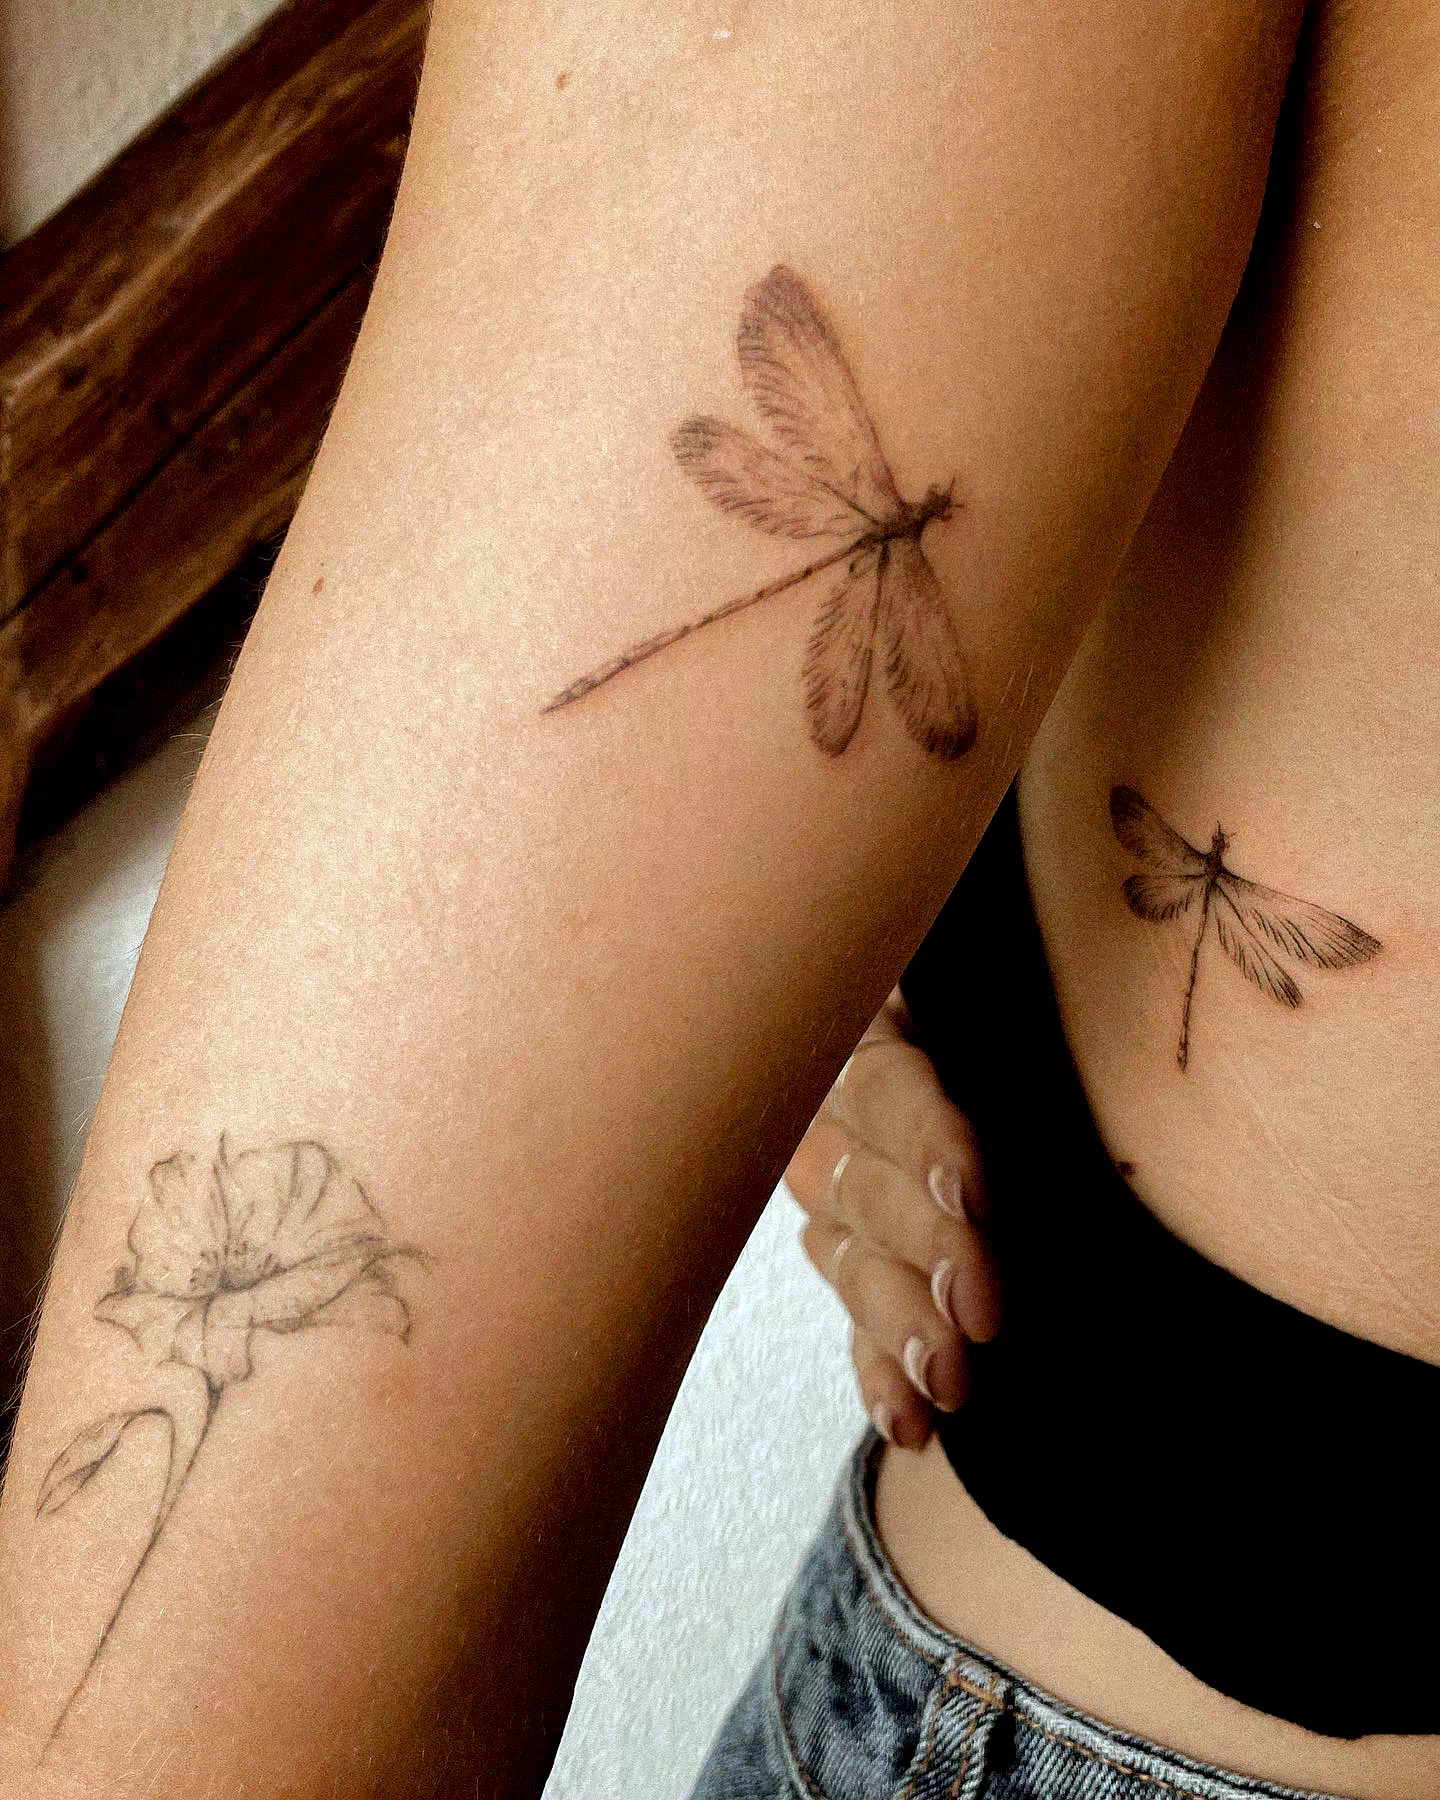 Tatuaje de una pequeña libélula con tinta negra